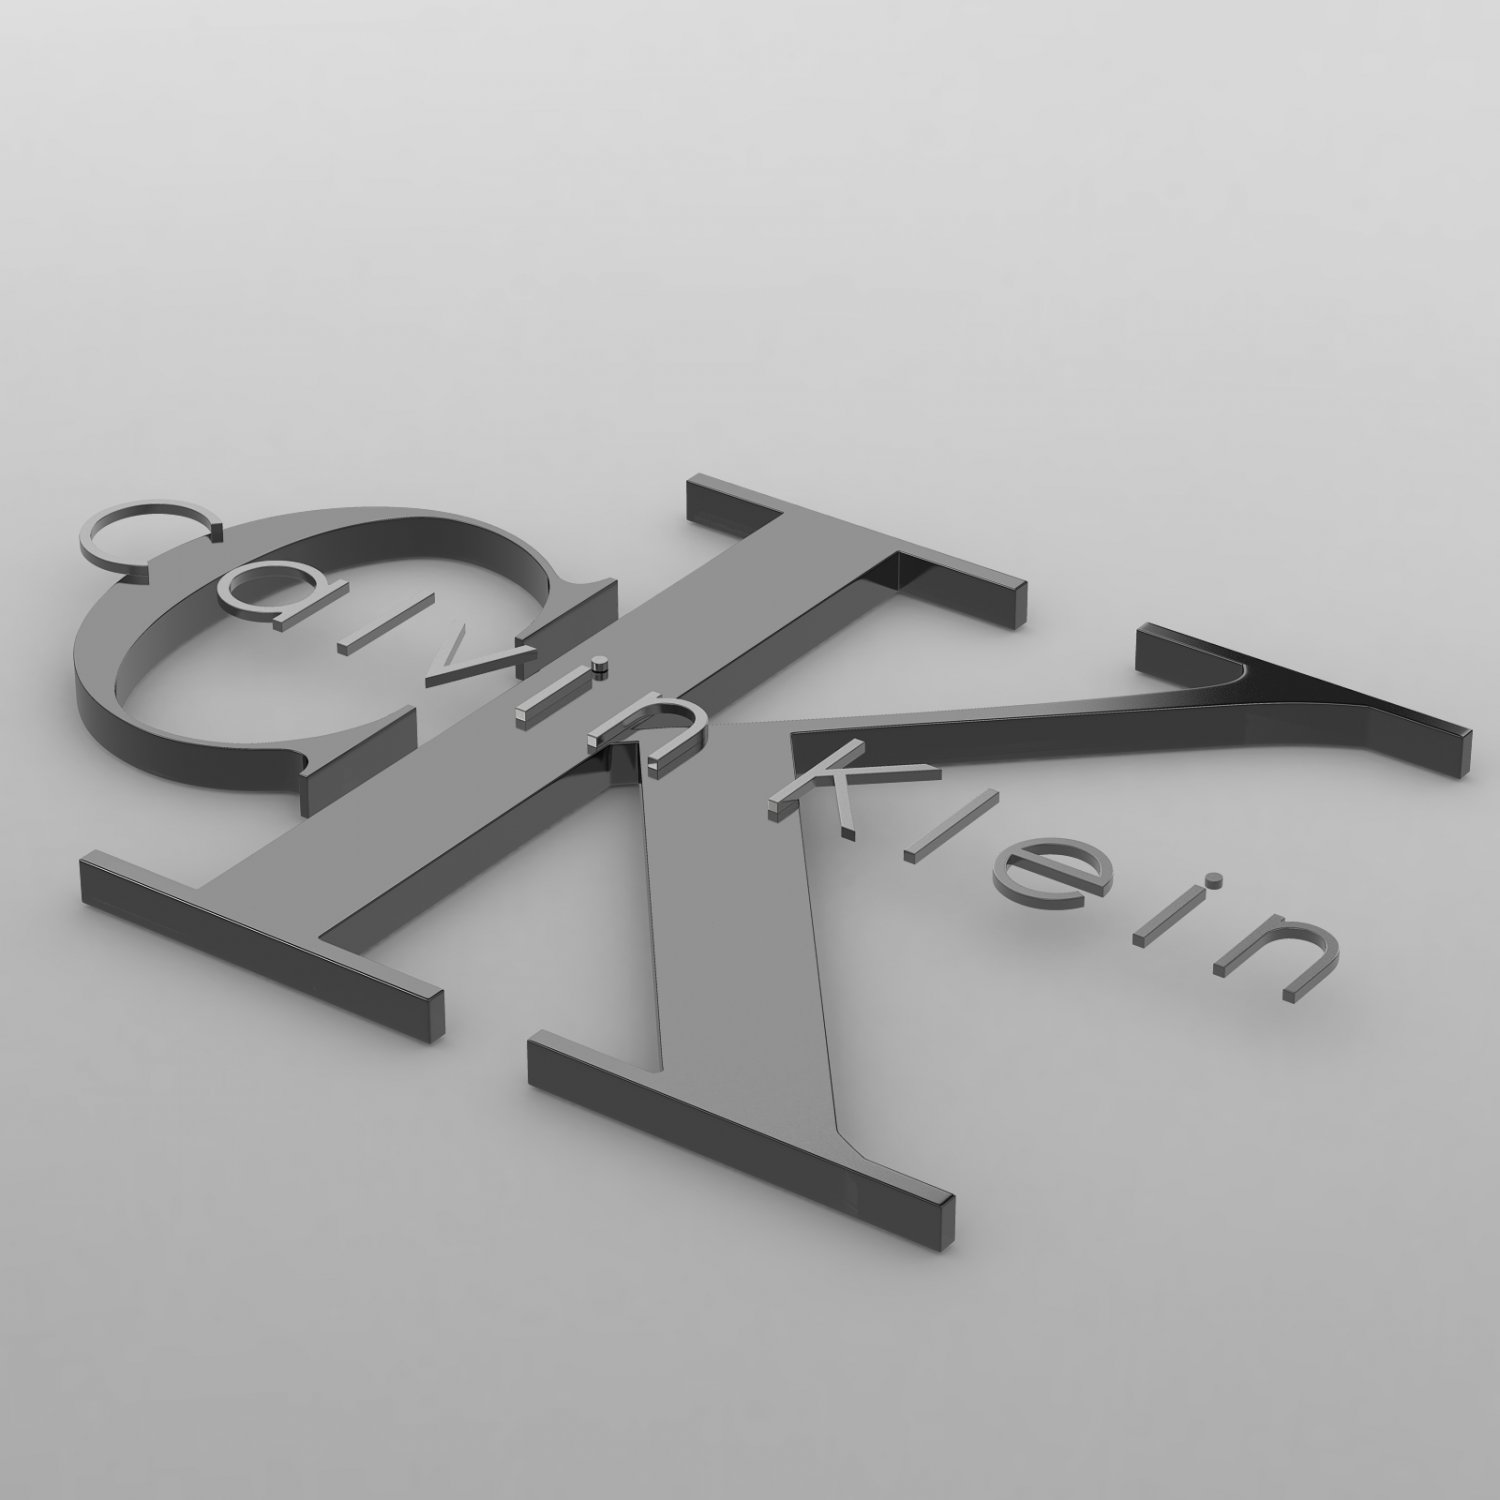 501 Calvin Klein Logo Images, Stock Photos, 3D objects, & Vectors